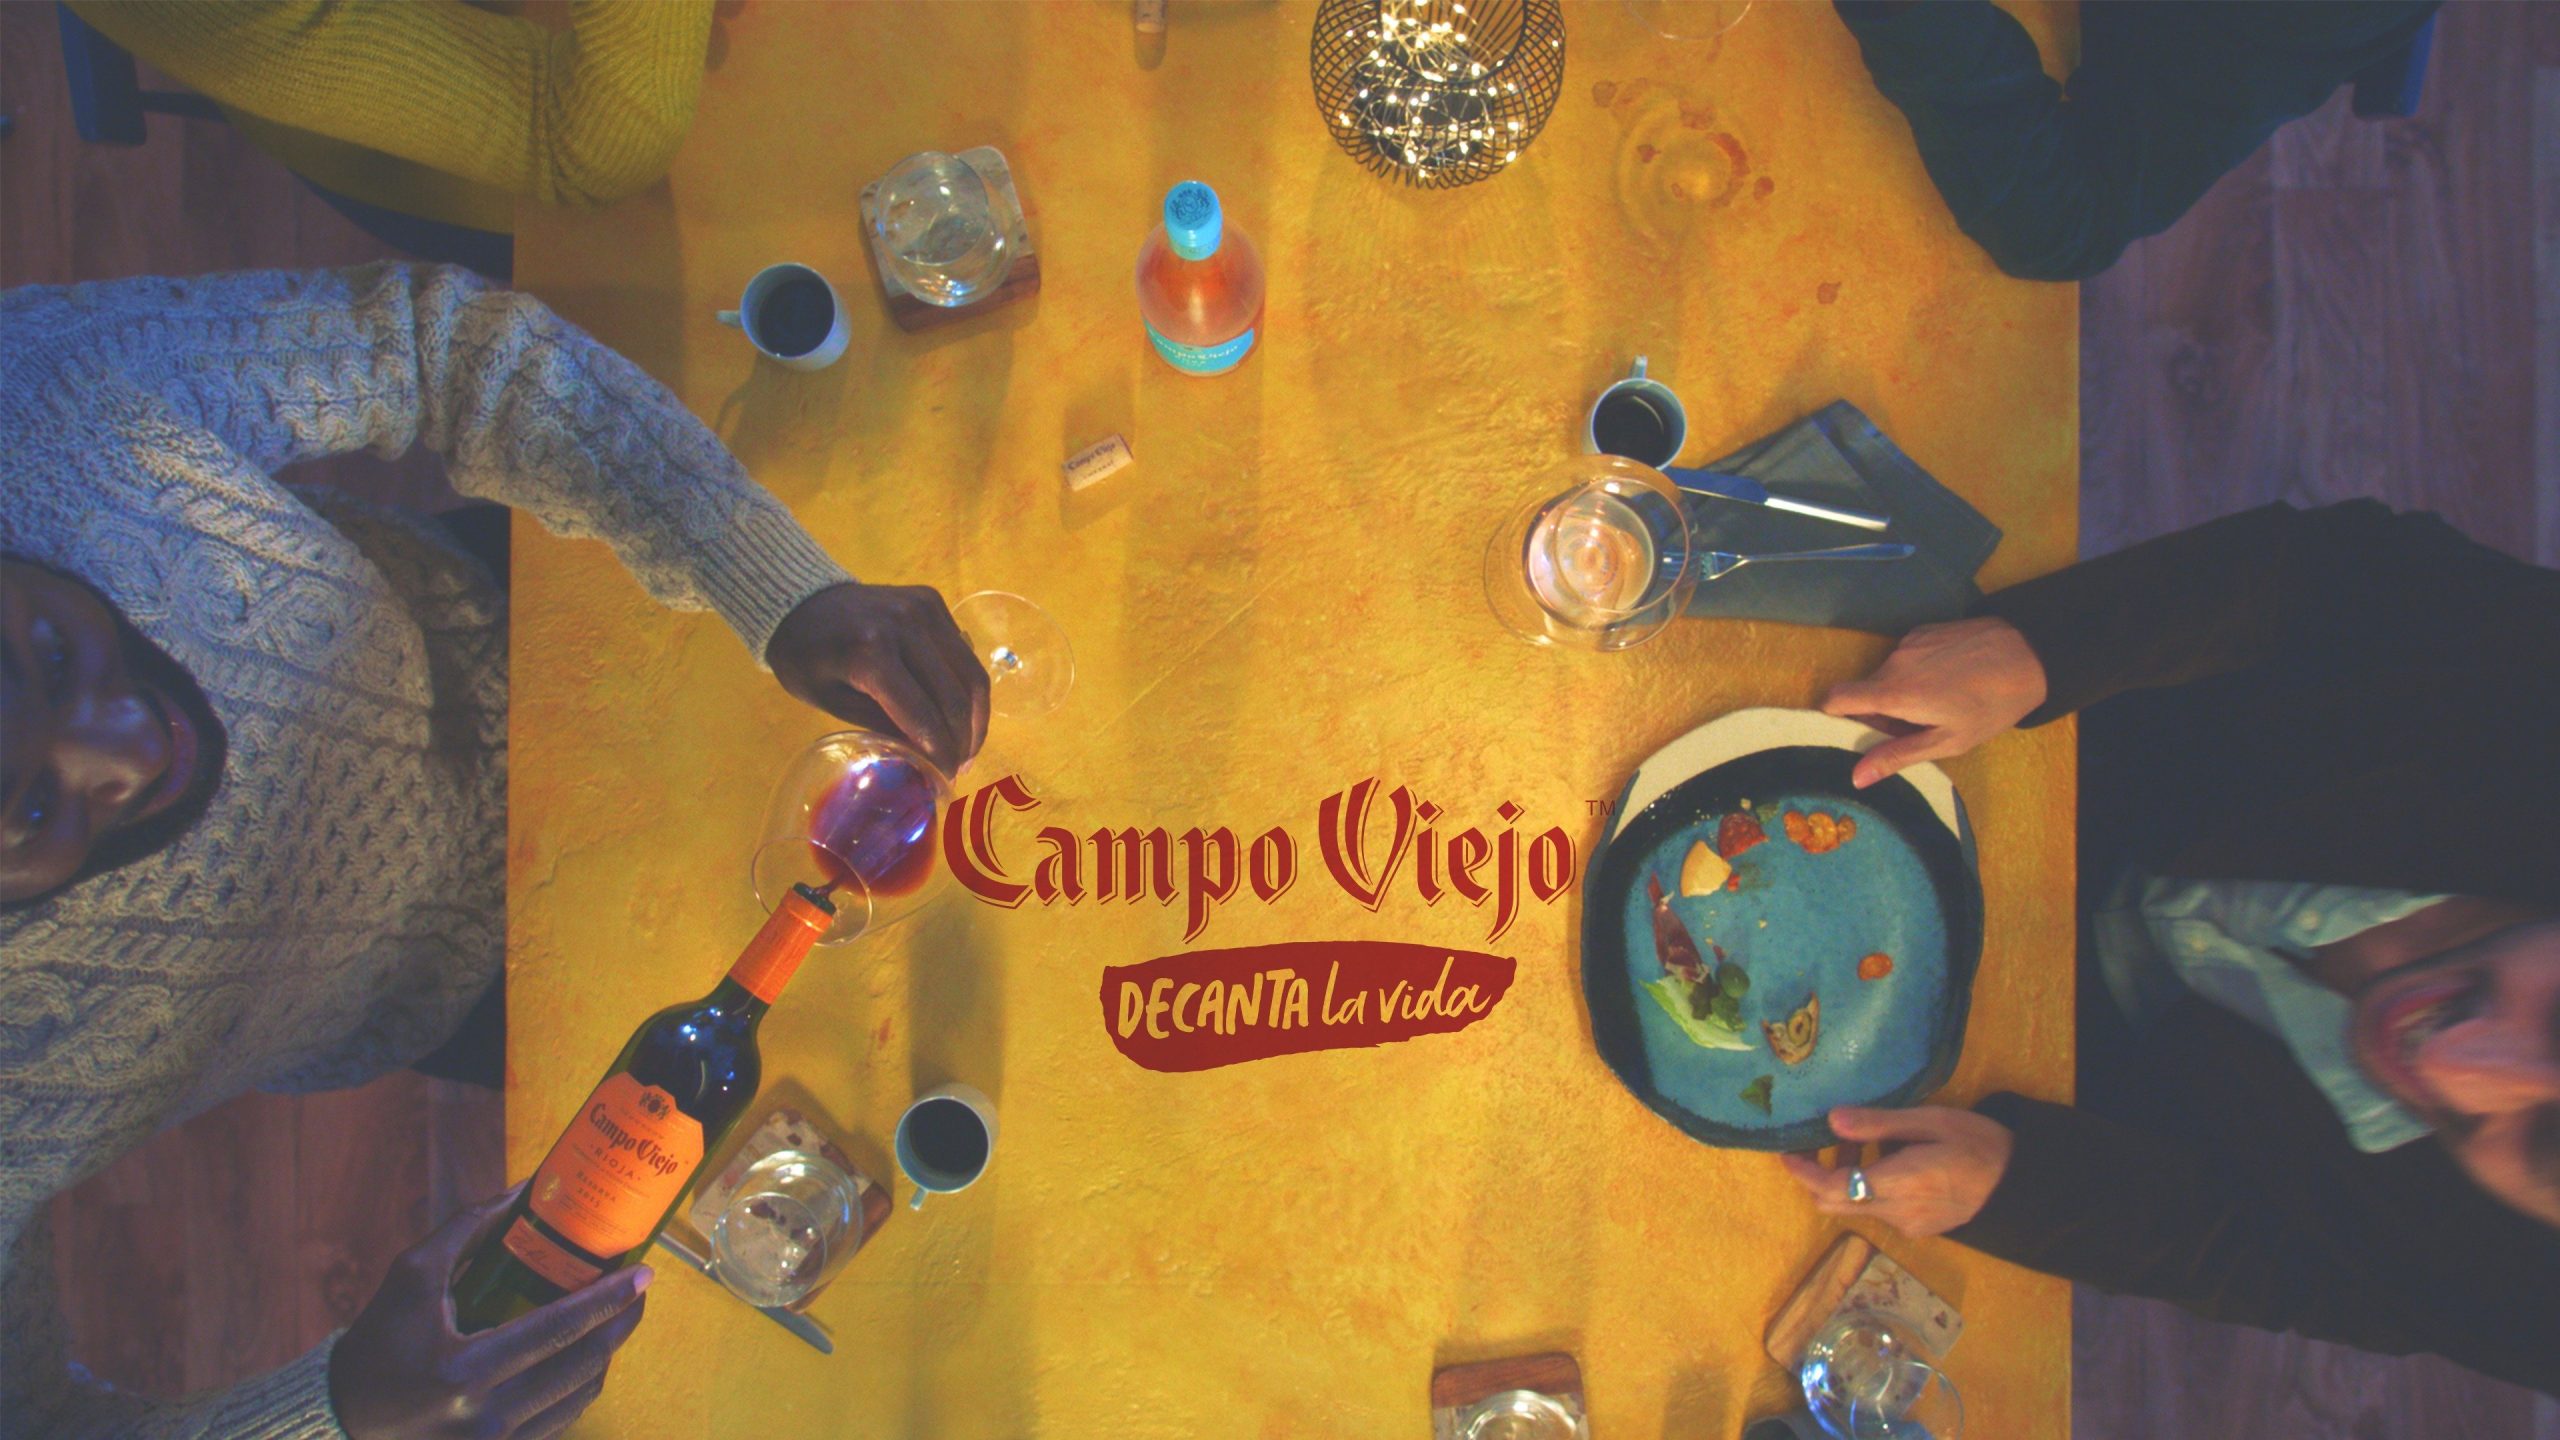 Campo Viejo ‘Decanta La Vida’ campaign returns for summer